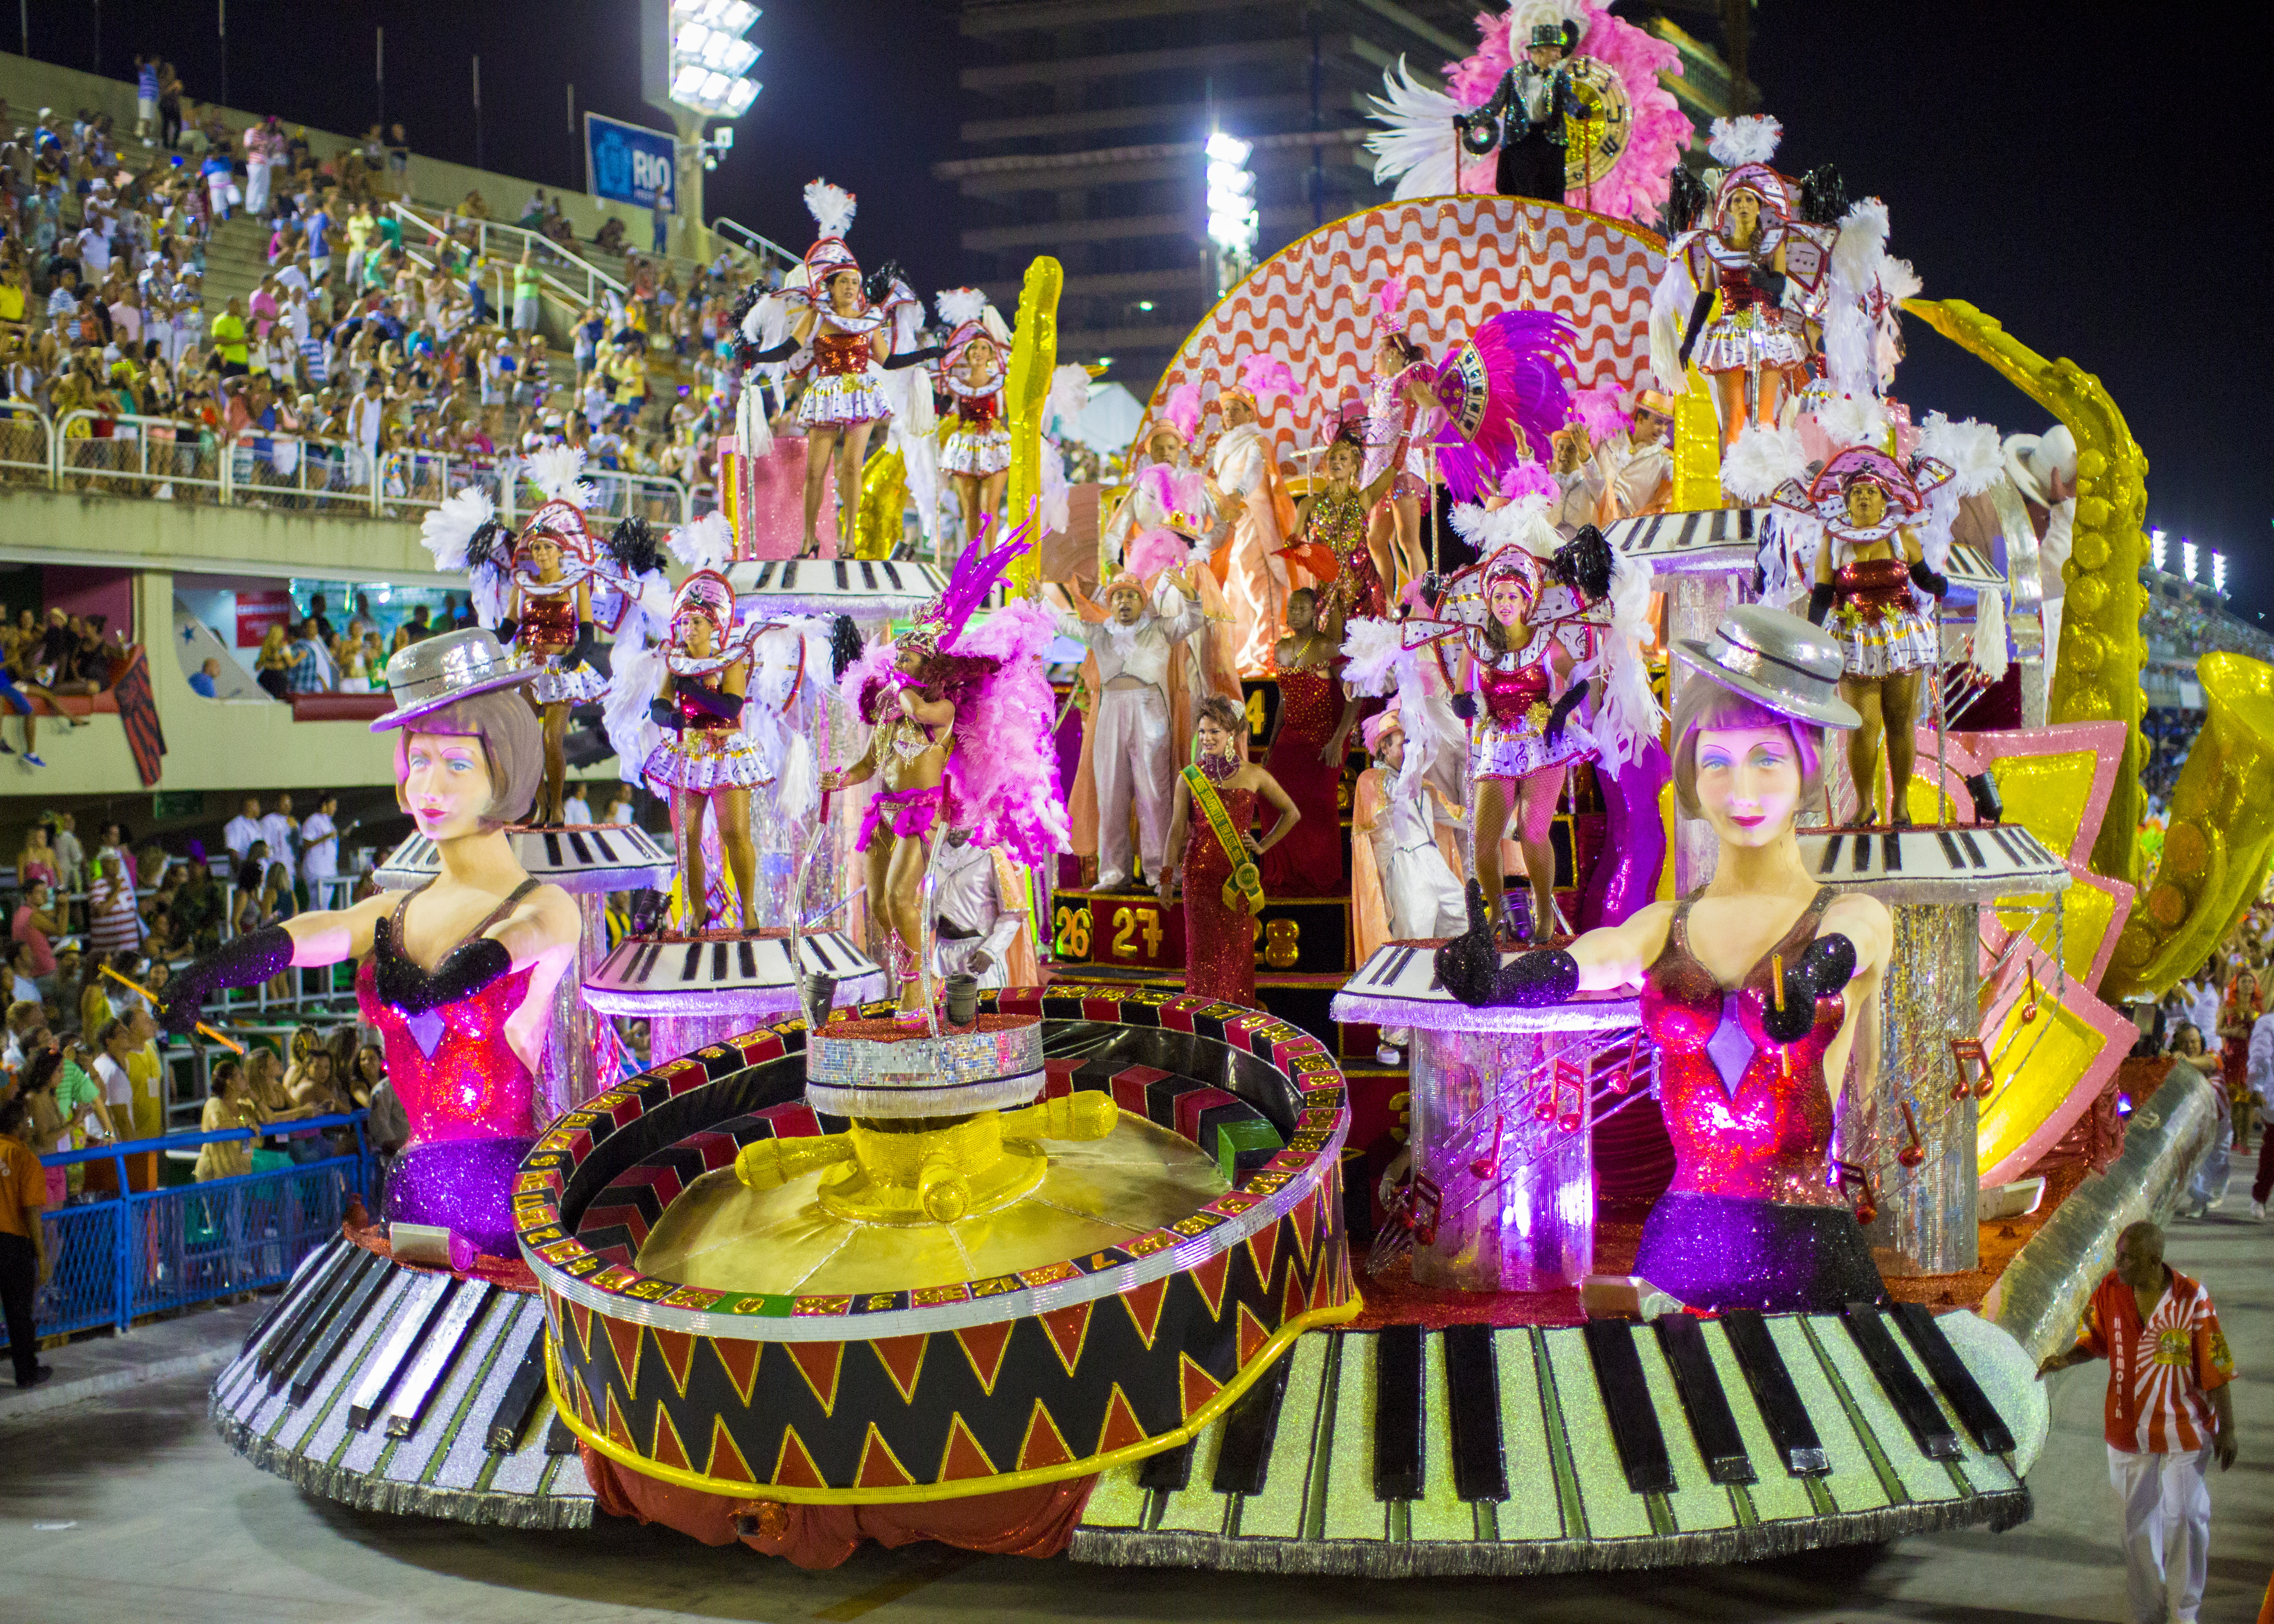 A colourful and decorative float at Carnival Samba